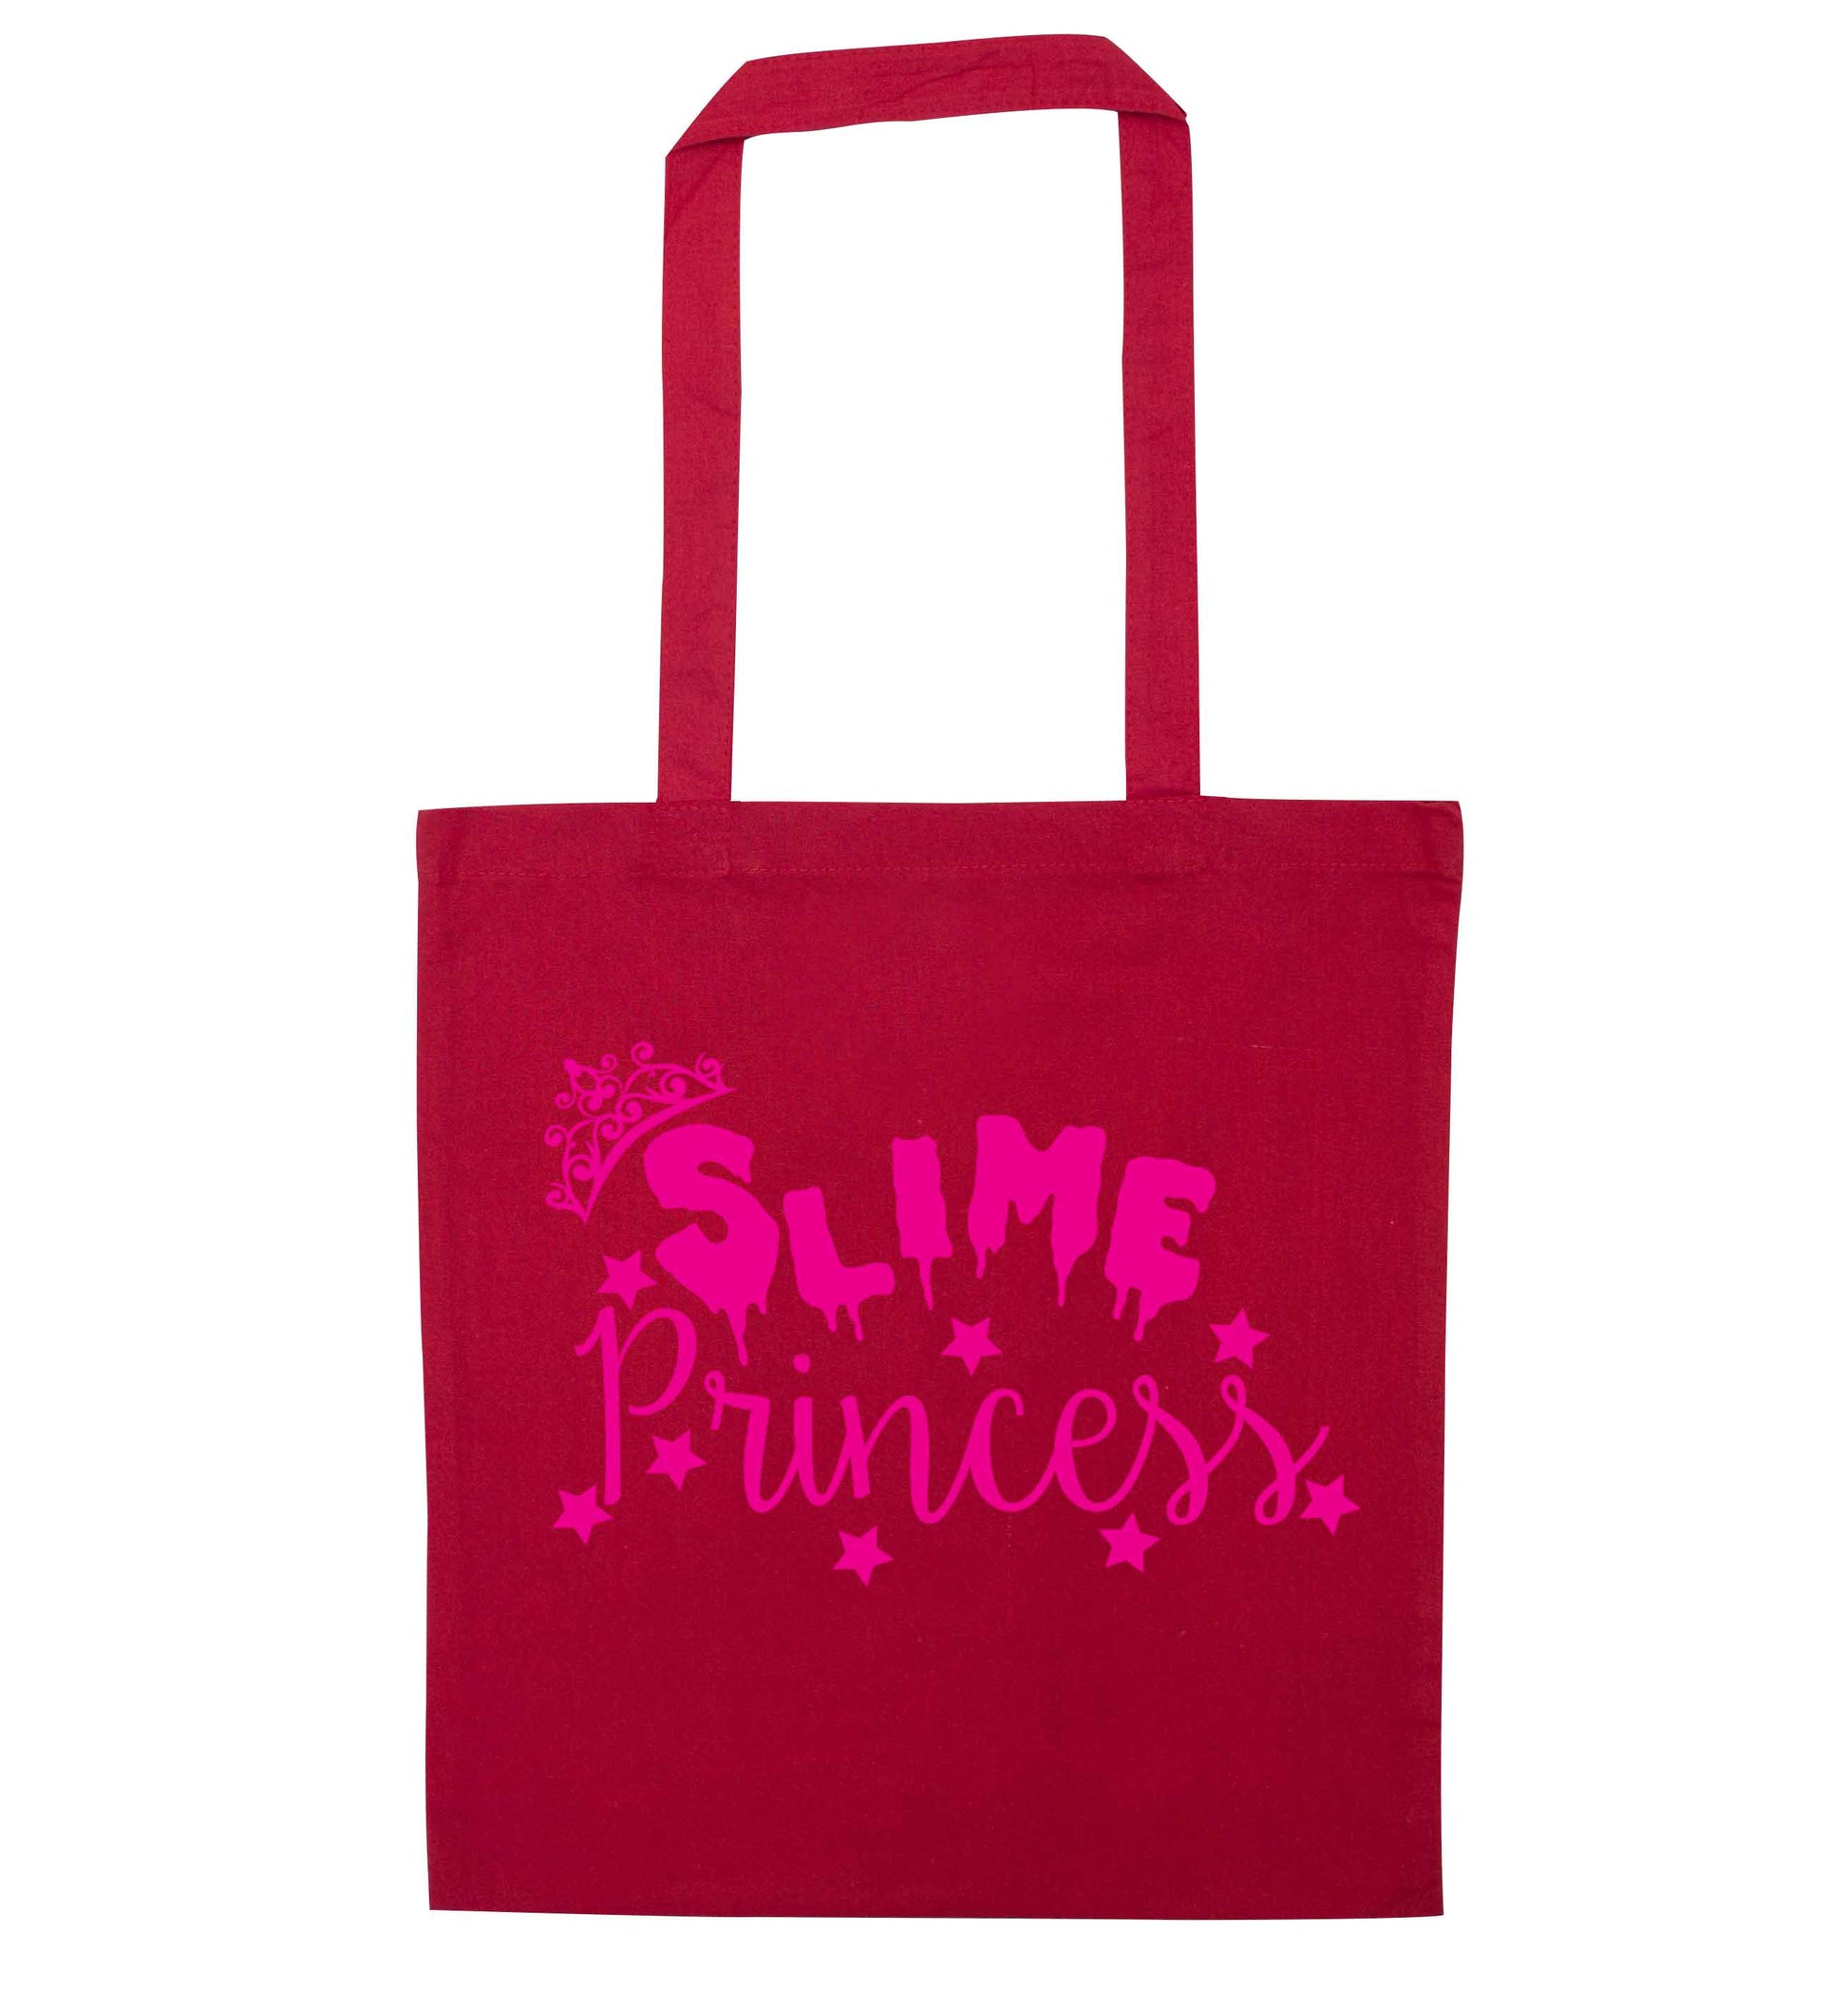 Neon pink slime princess red tote bag